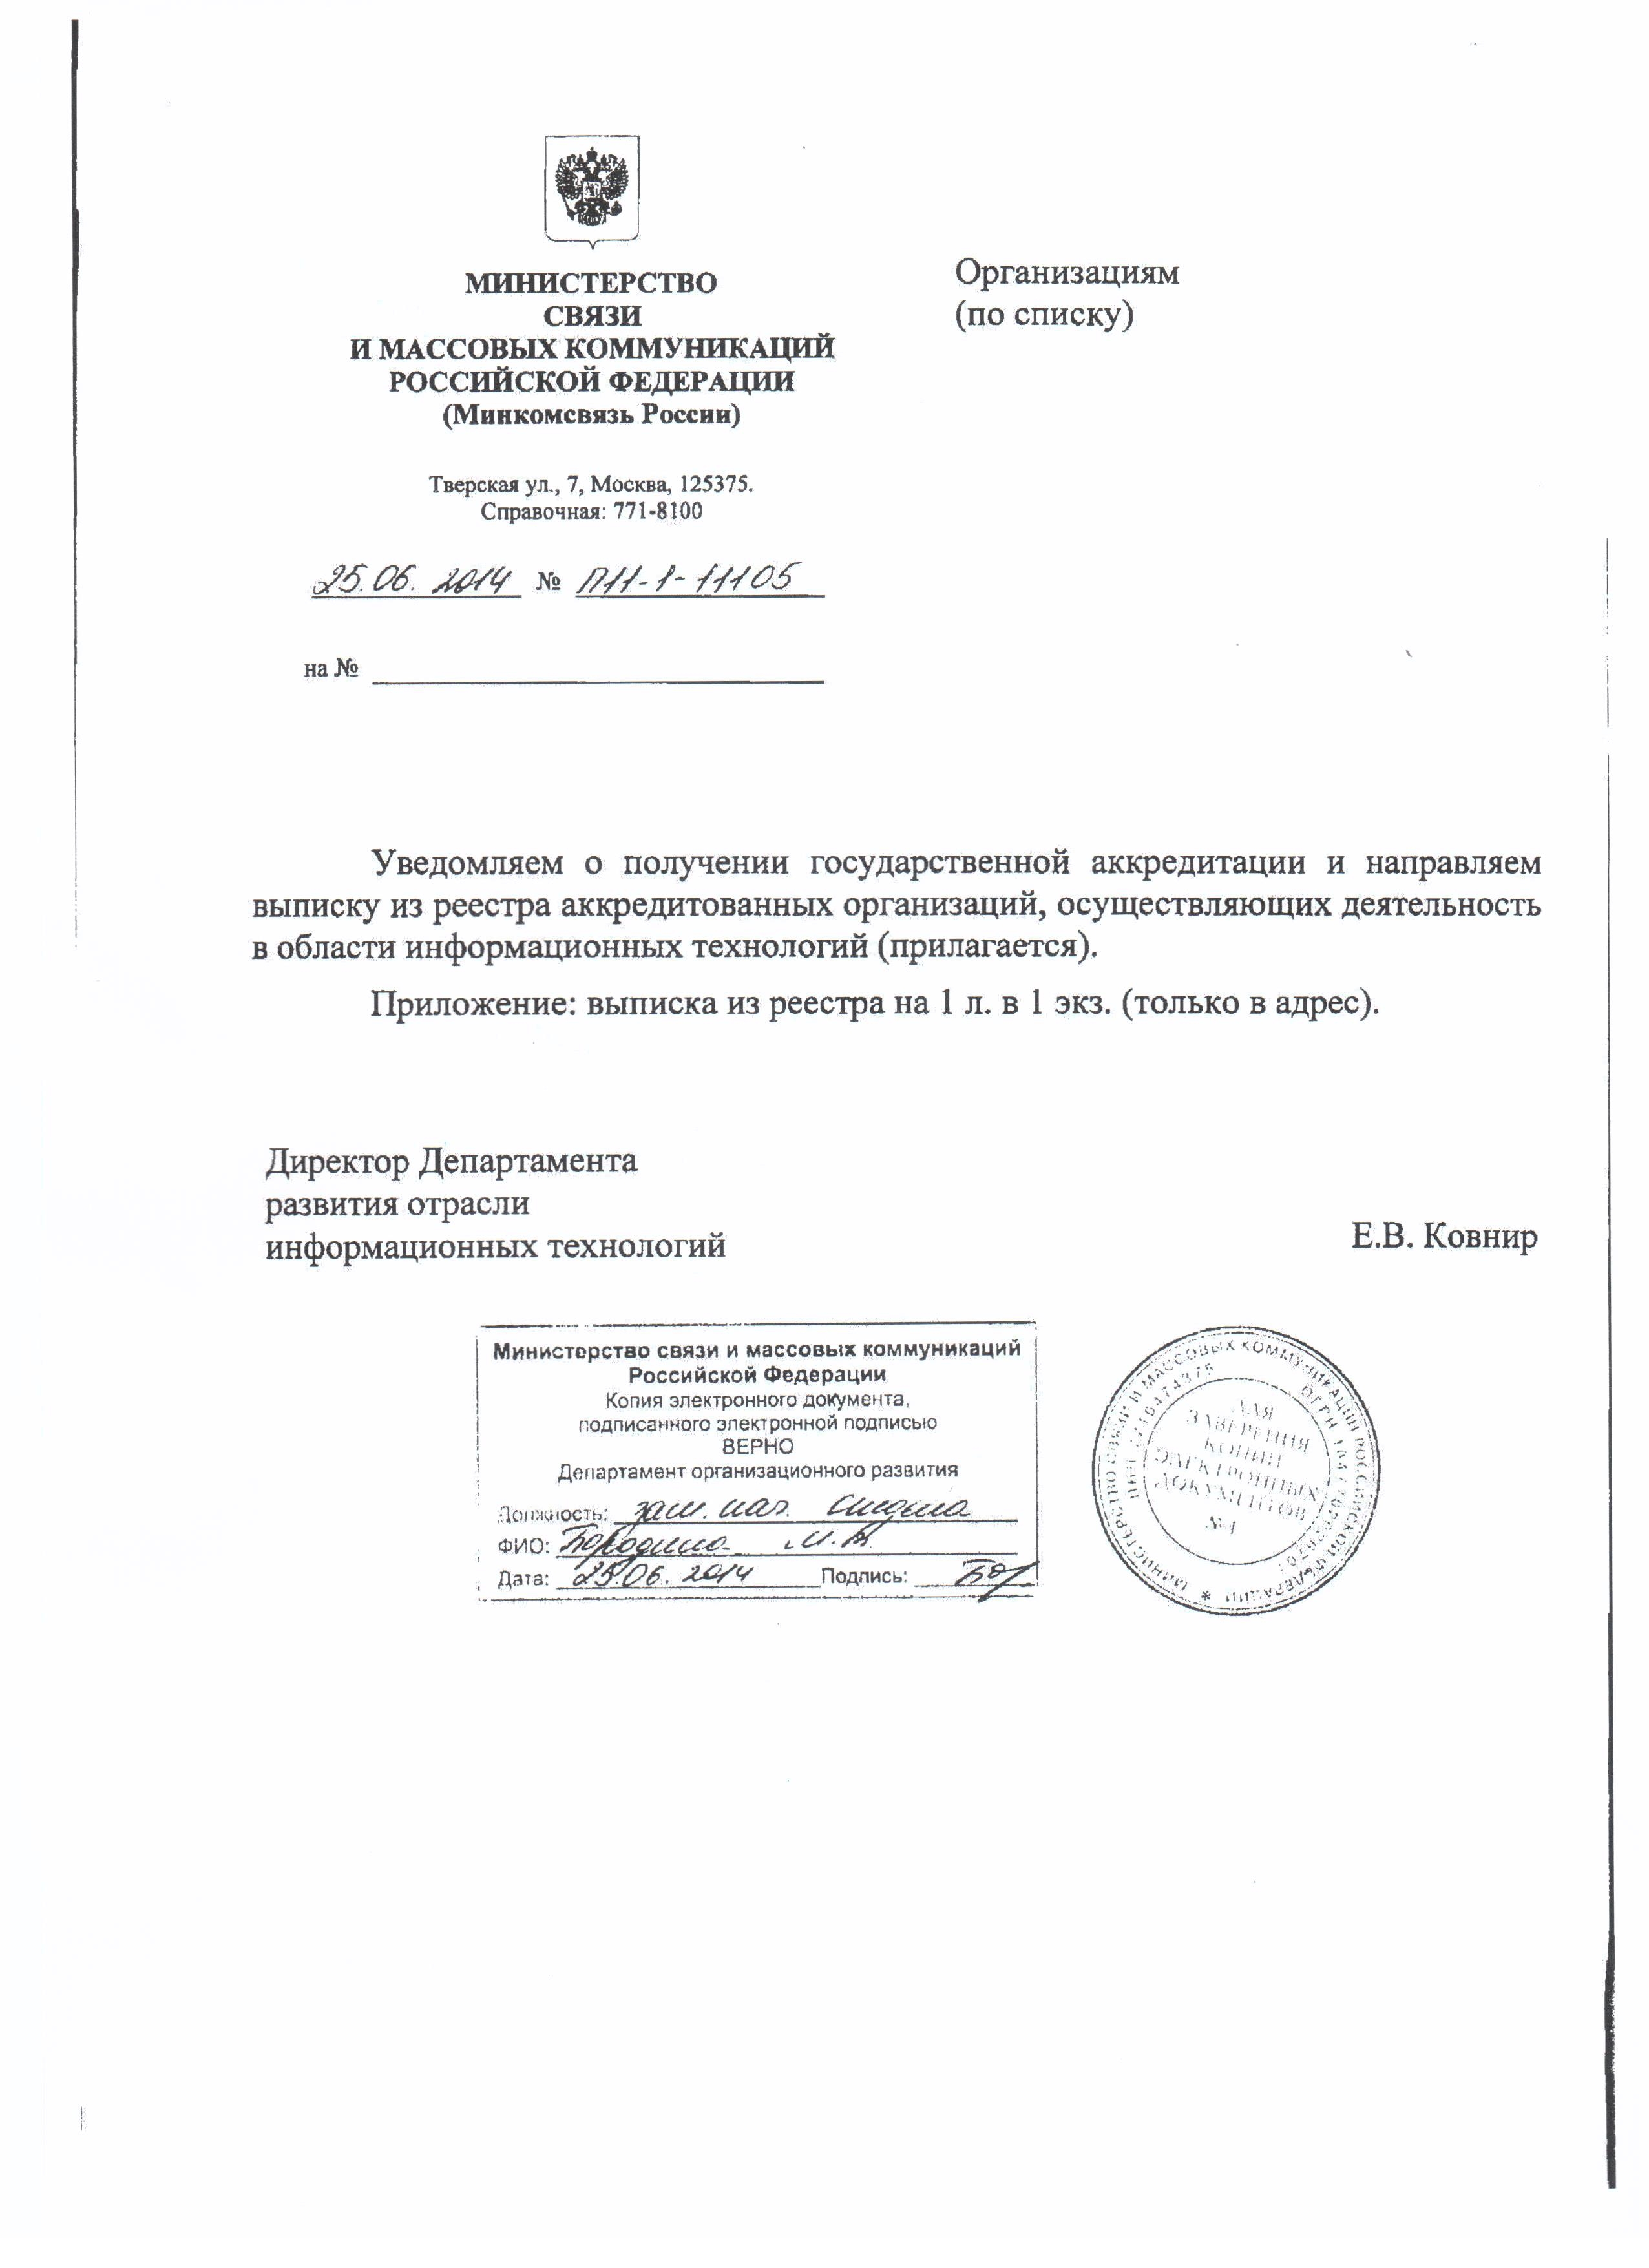 Аккредитация как IT-компания в Минкомсвязи России